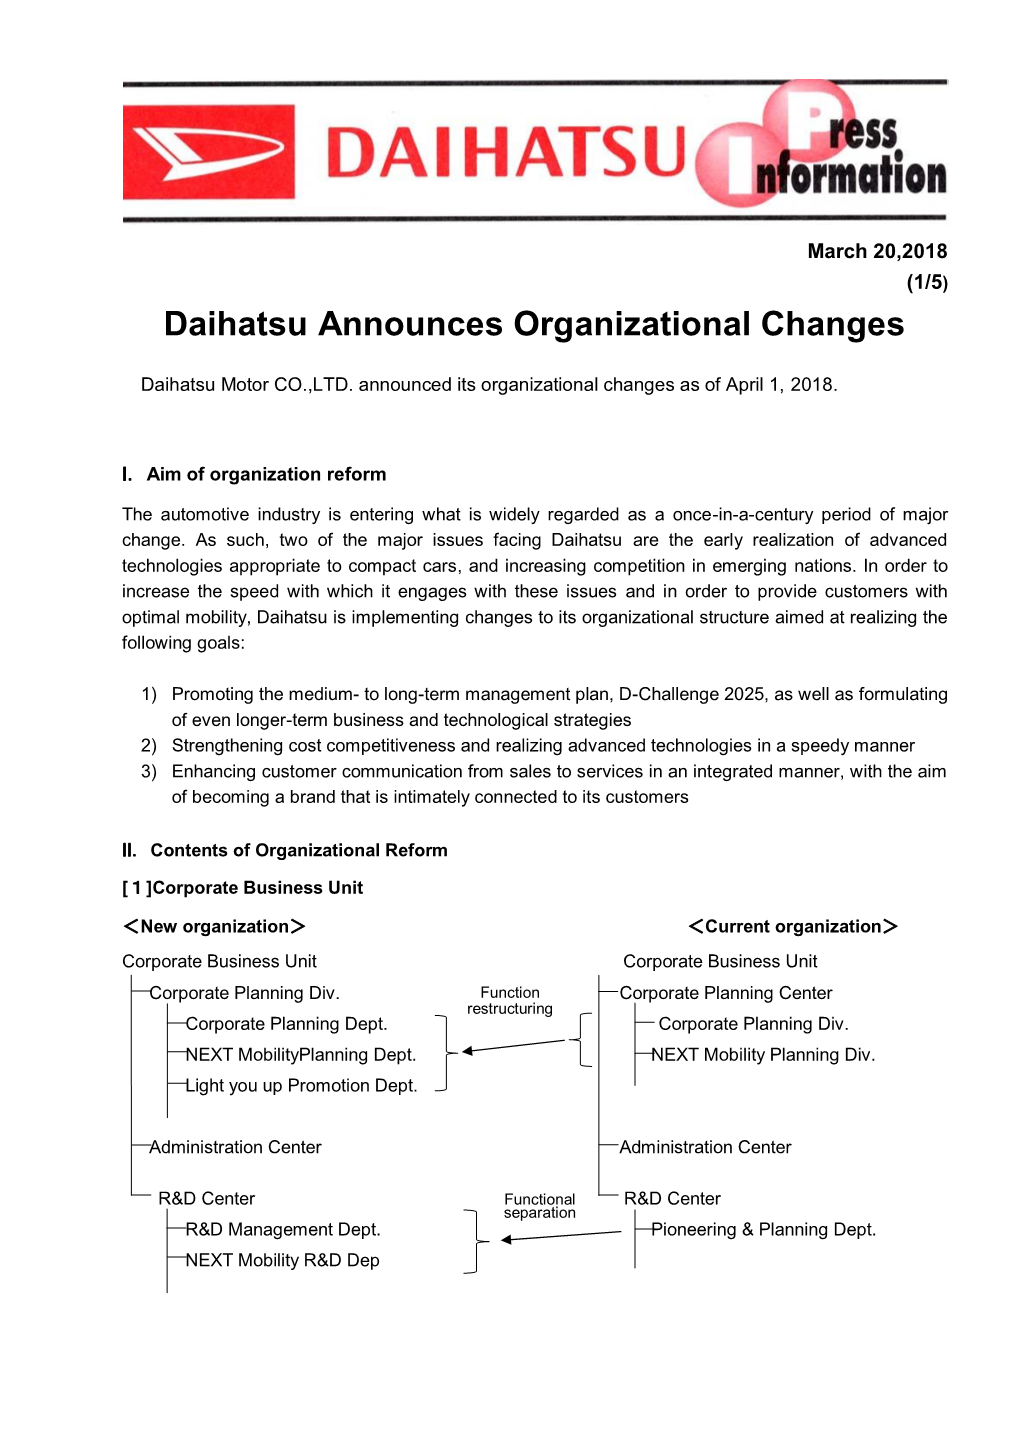 Mar. 20, 2018 Company Daihatsu Announces Organizational Changes